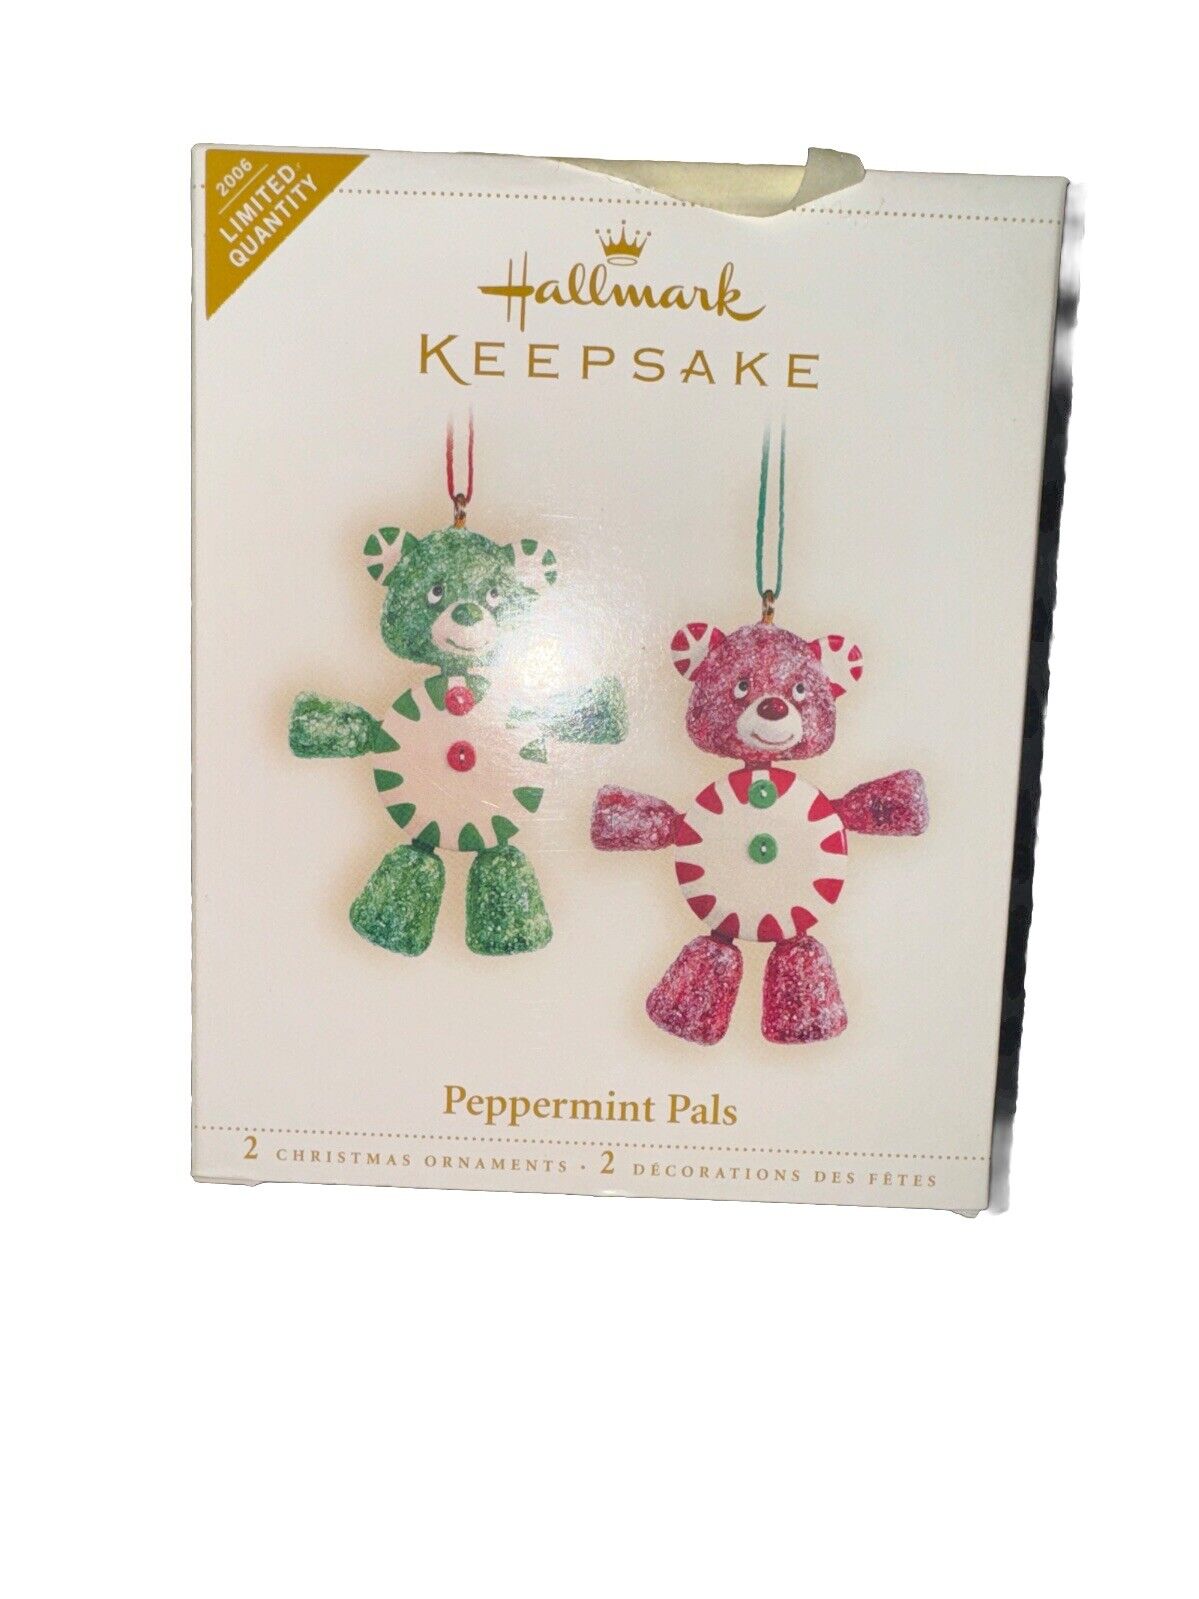 Hallmark Keepsake Ornament “Peppermint Pals” 2006 Set of 2